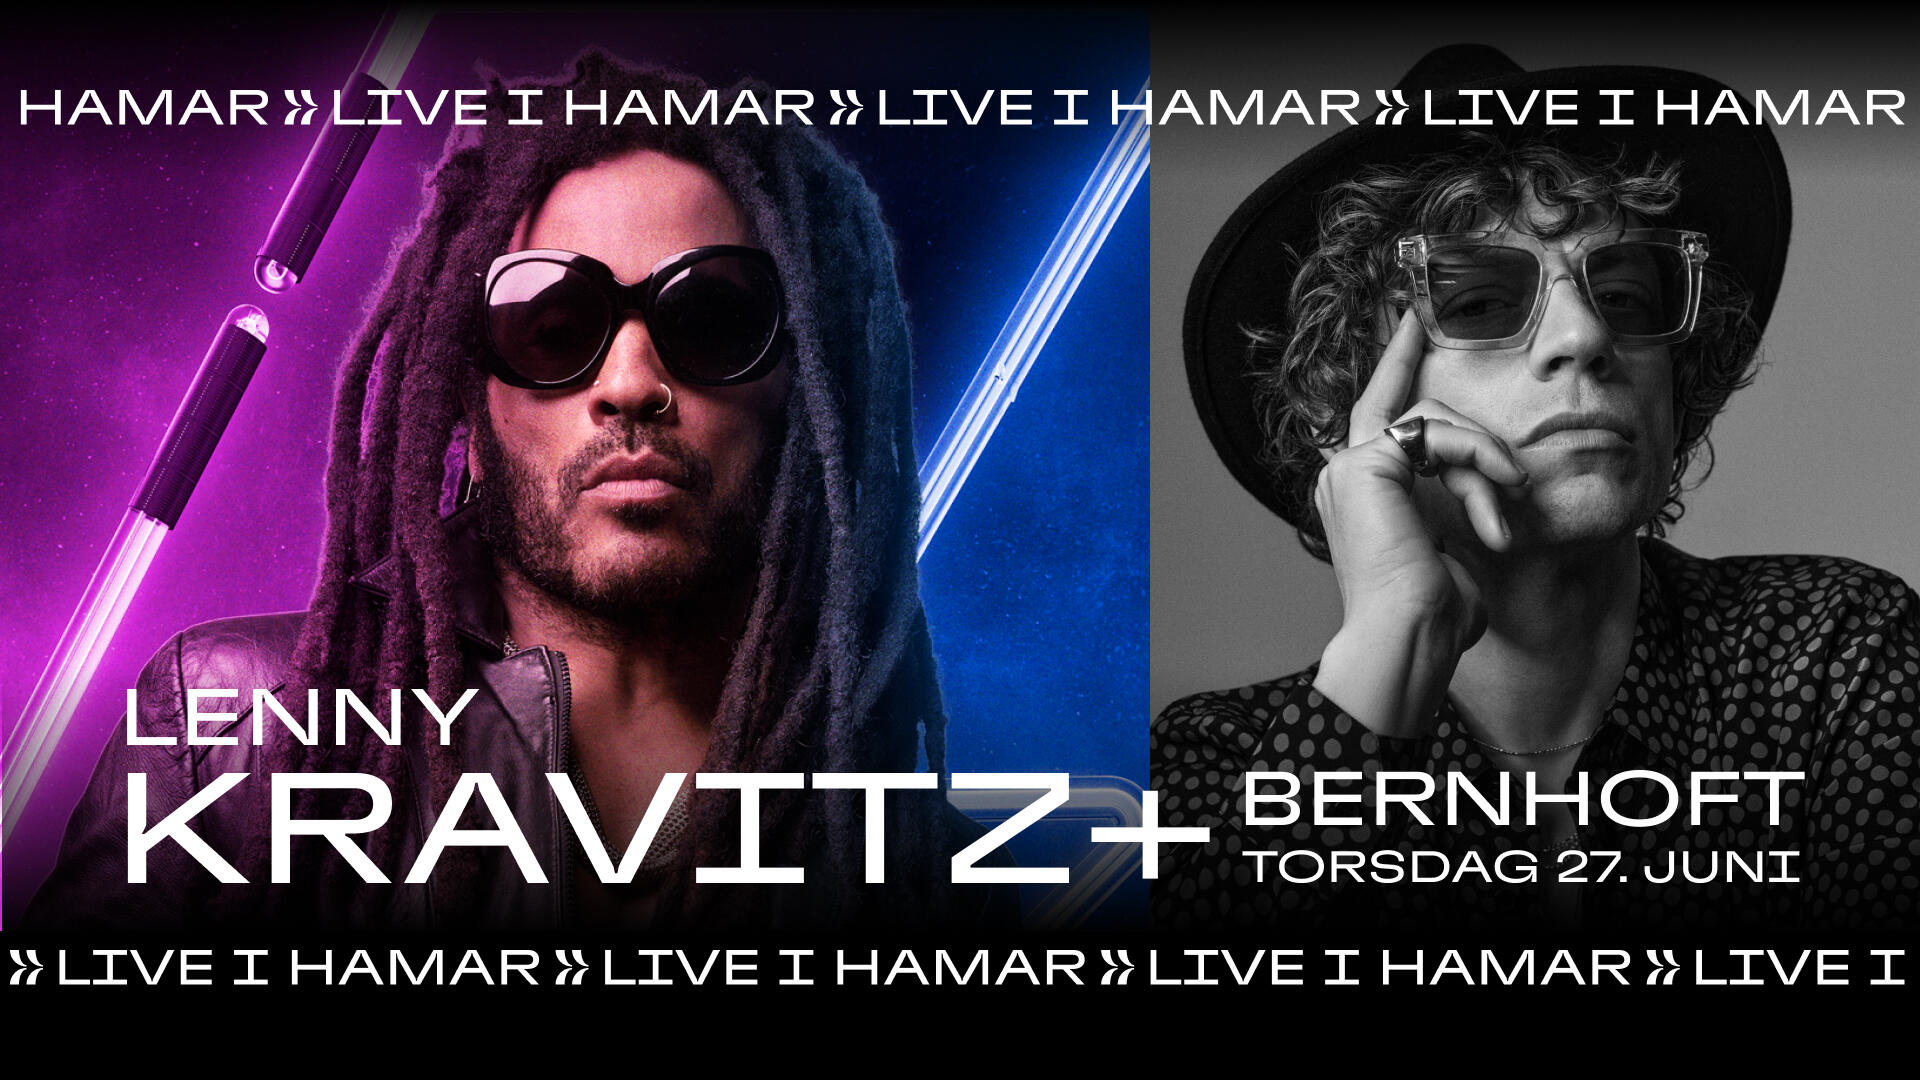 Lenny Kravitz med solbriller - kommer til Hamar 27. juni.